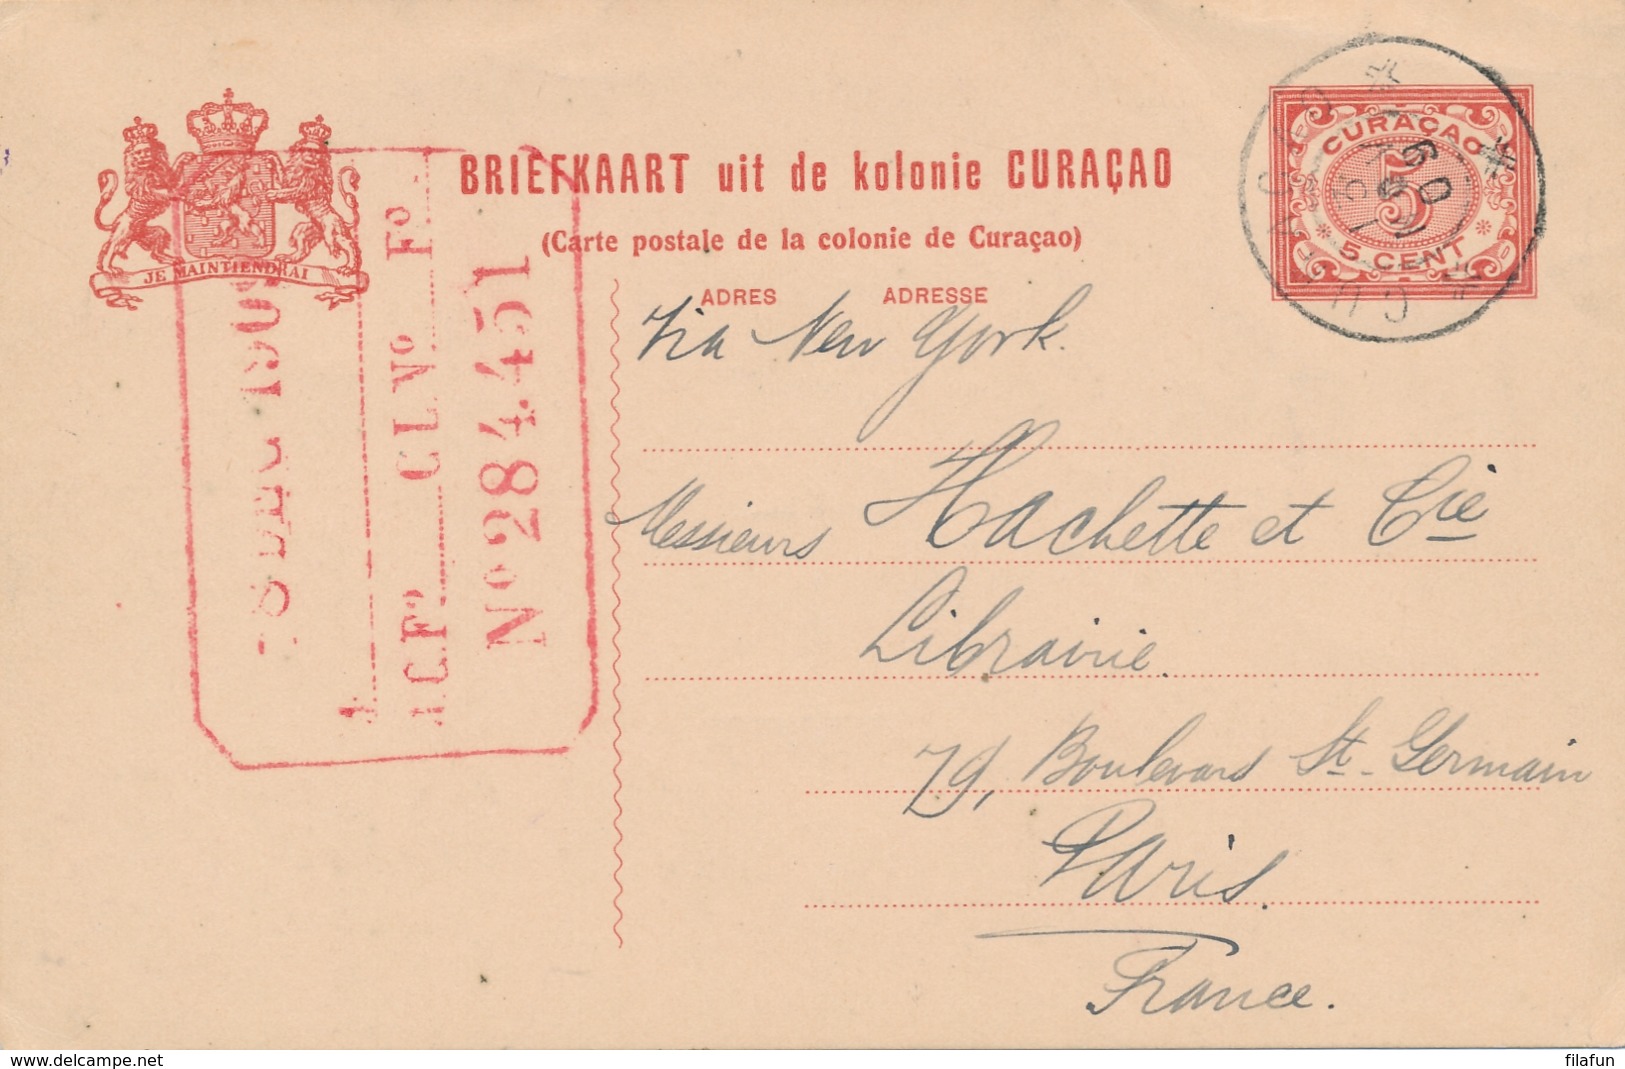 Curacao - 1909 - 5 Cent Cijfer, Briefkaart G19 Commercial Use Van GR Curacao Naar Paris / France - Curaçao, Nederlandse Antillen, Aruba